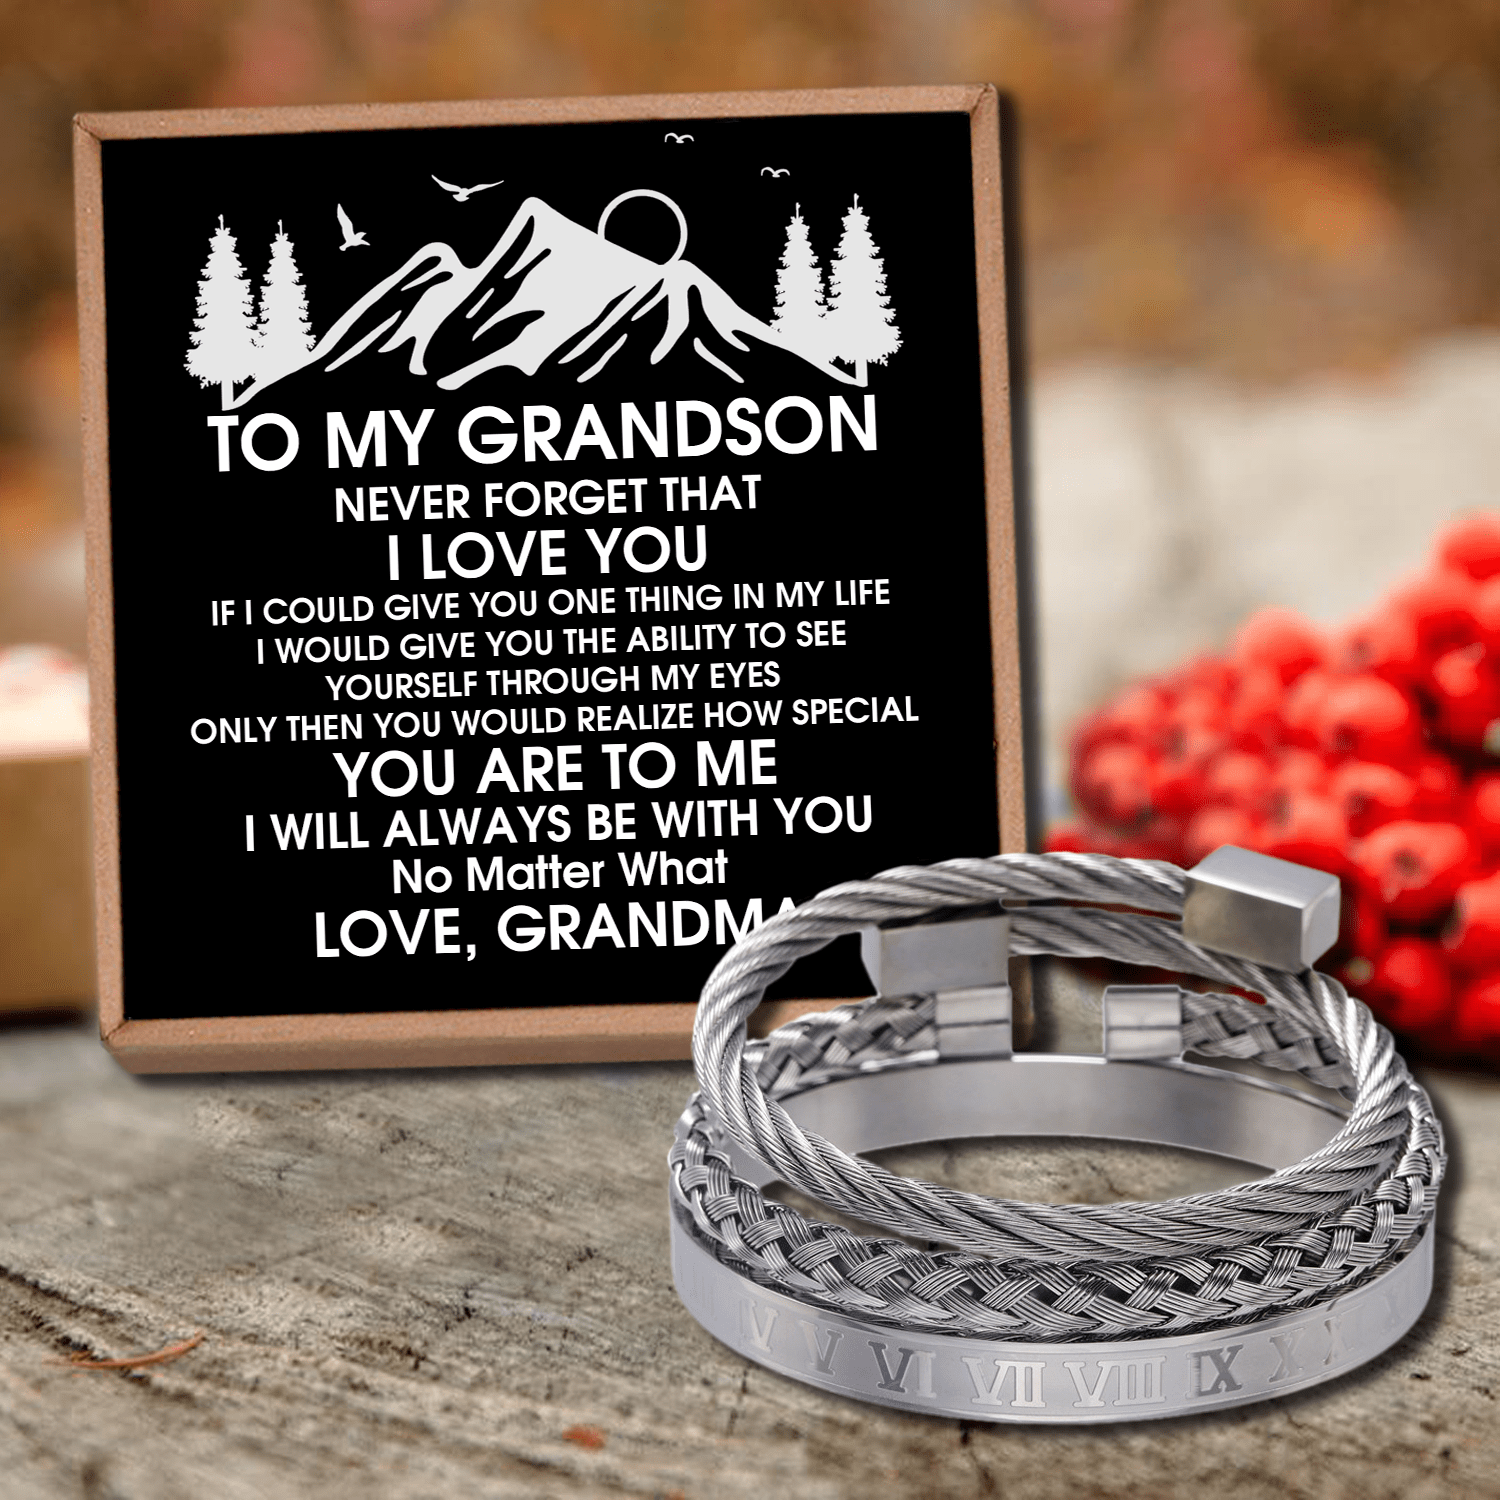 Bracelets Grandma To Grandson - I Love You Roman Numeral Bracelet Set Silver GiveMe-Gifts